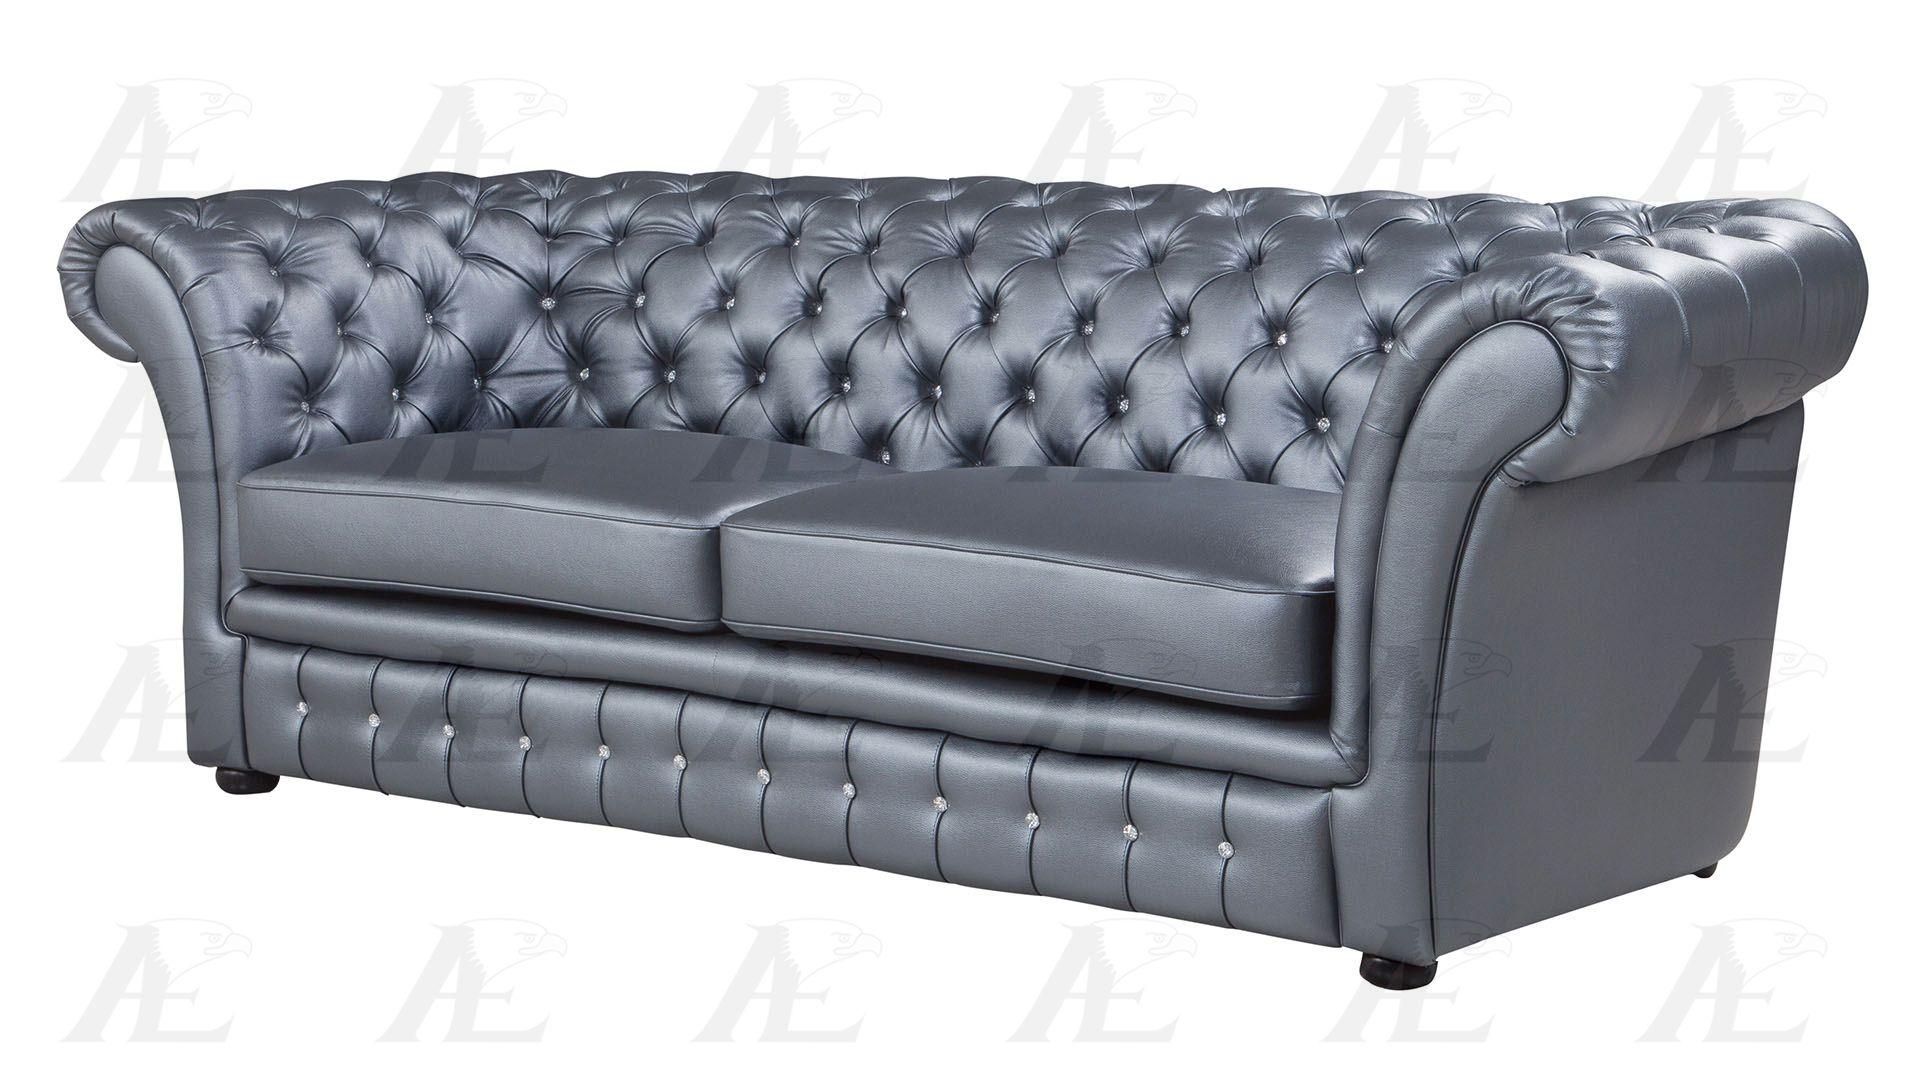 

    
American Eagle Furniture AE503-DG Sofa Dark Gray AE503-DG-Sofa
